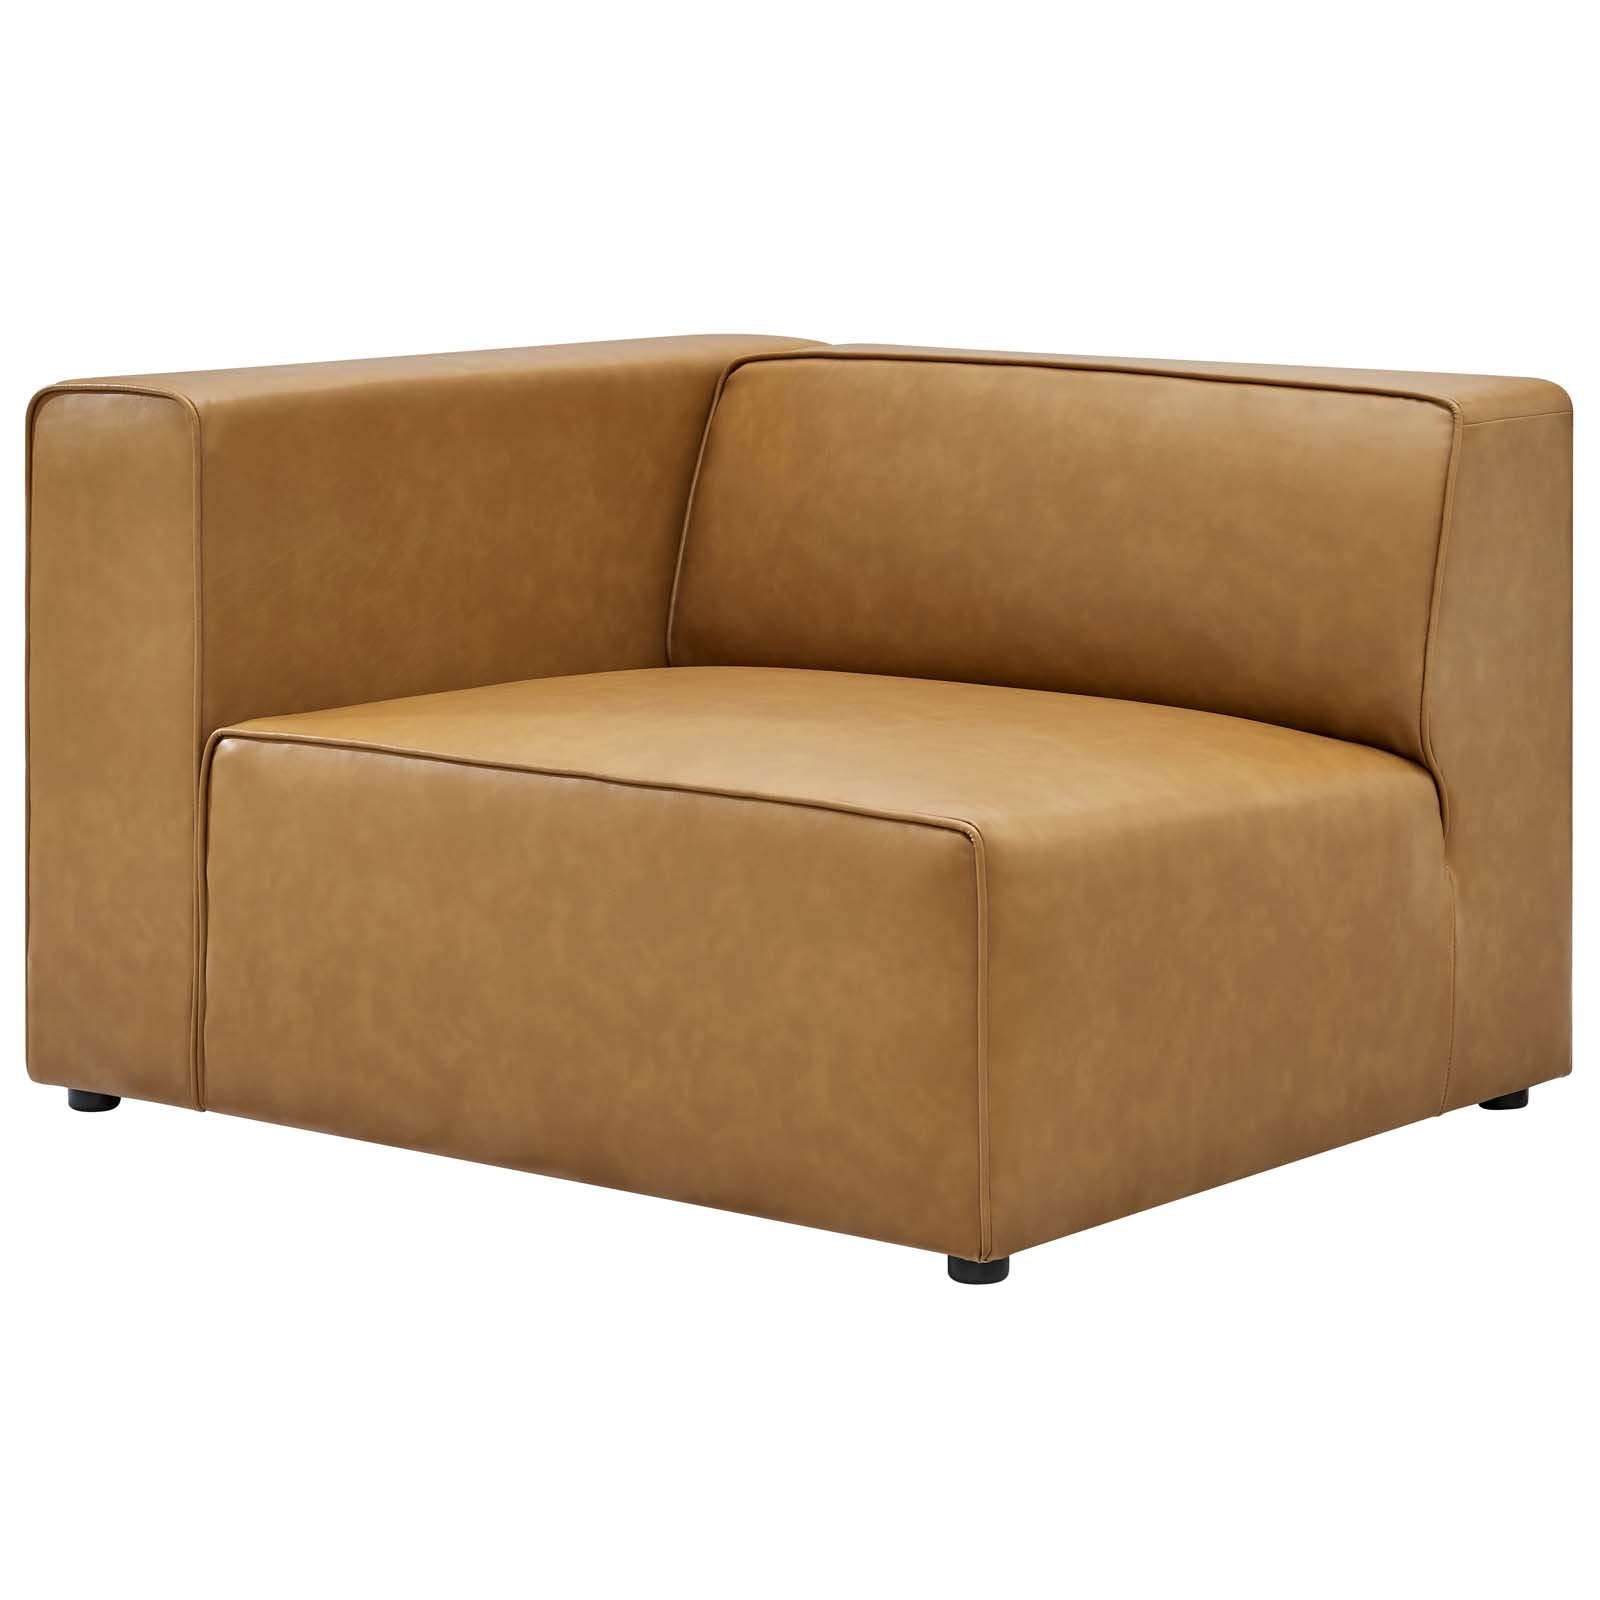 Mingle Vegan Leather Sofa and Ottoman Set - East Shore Modern Home Furnishings